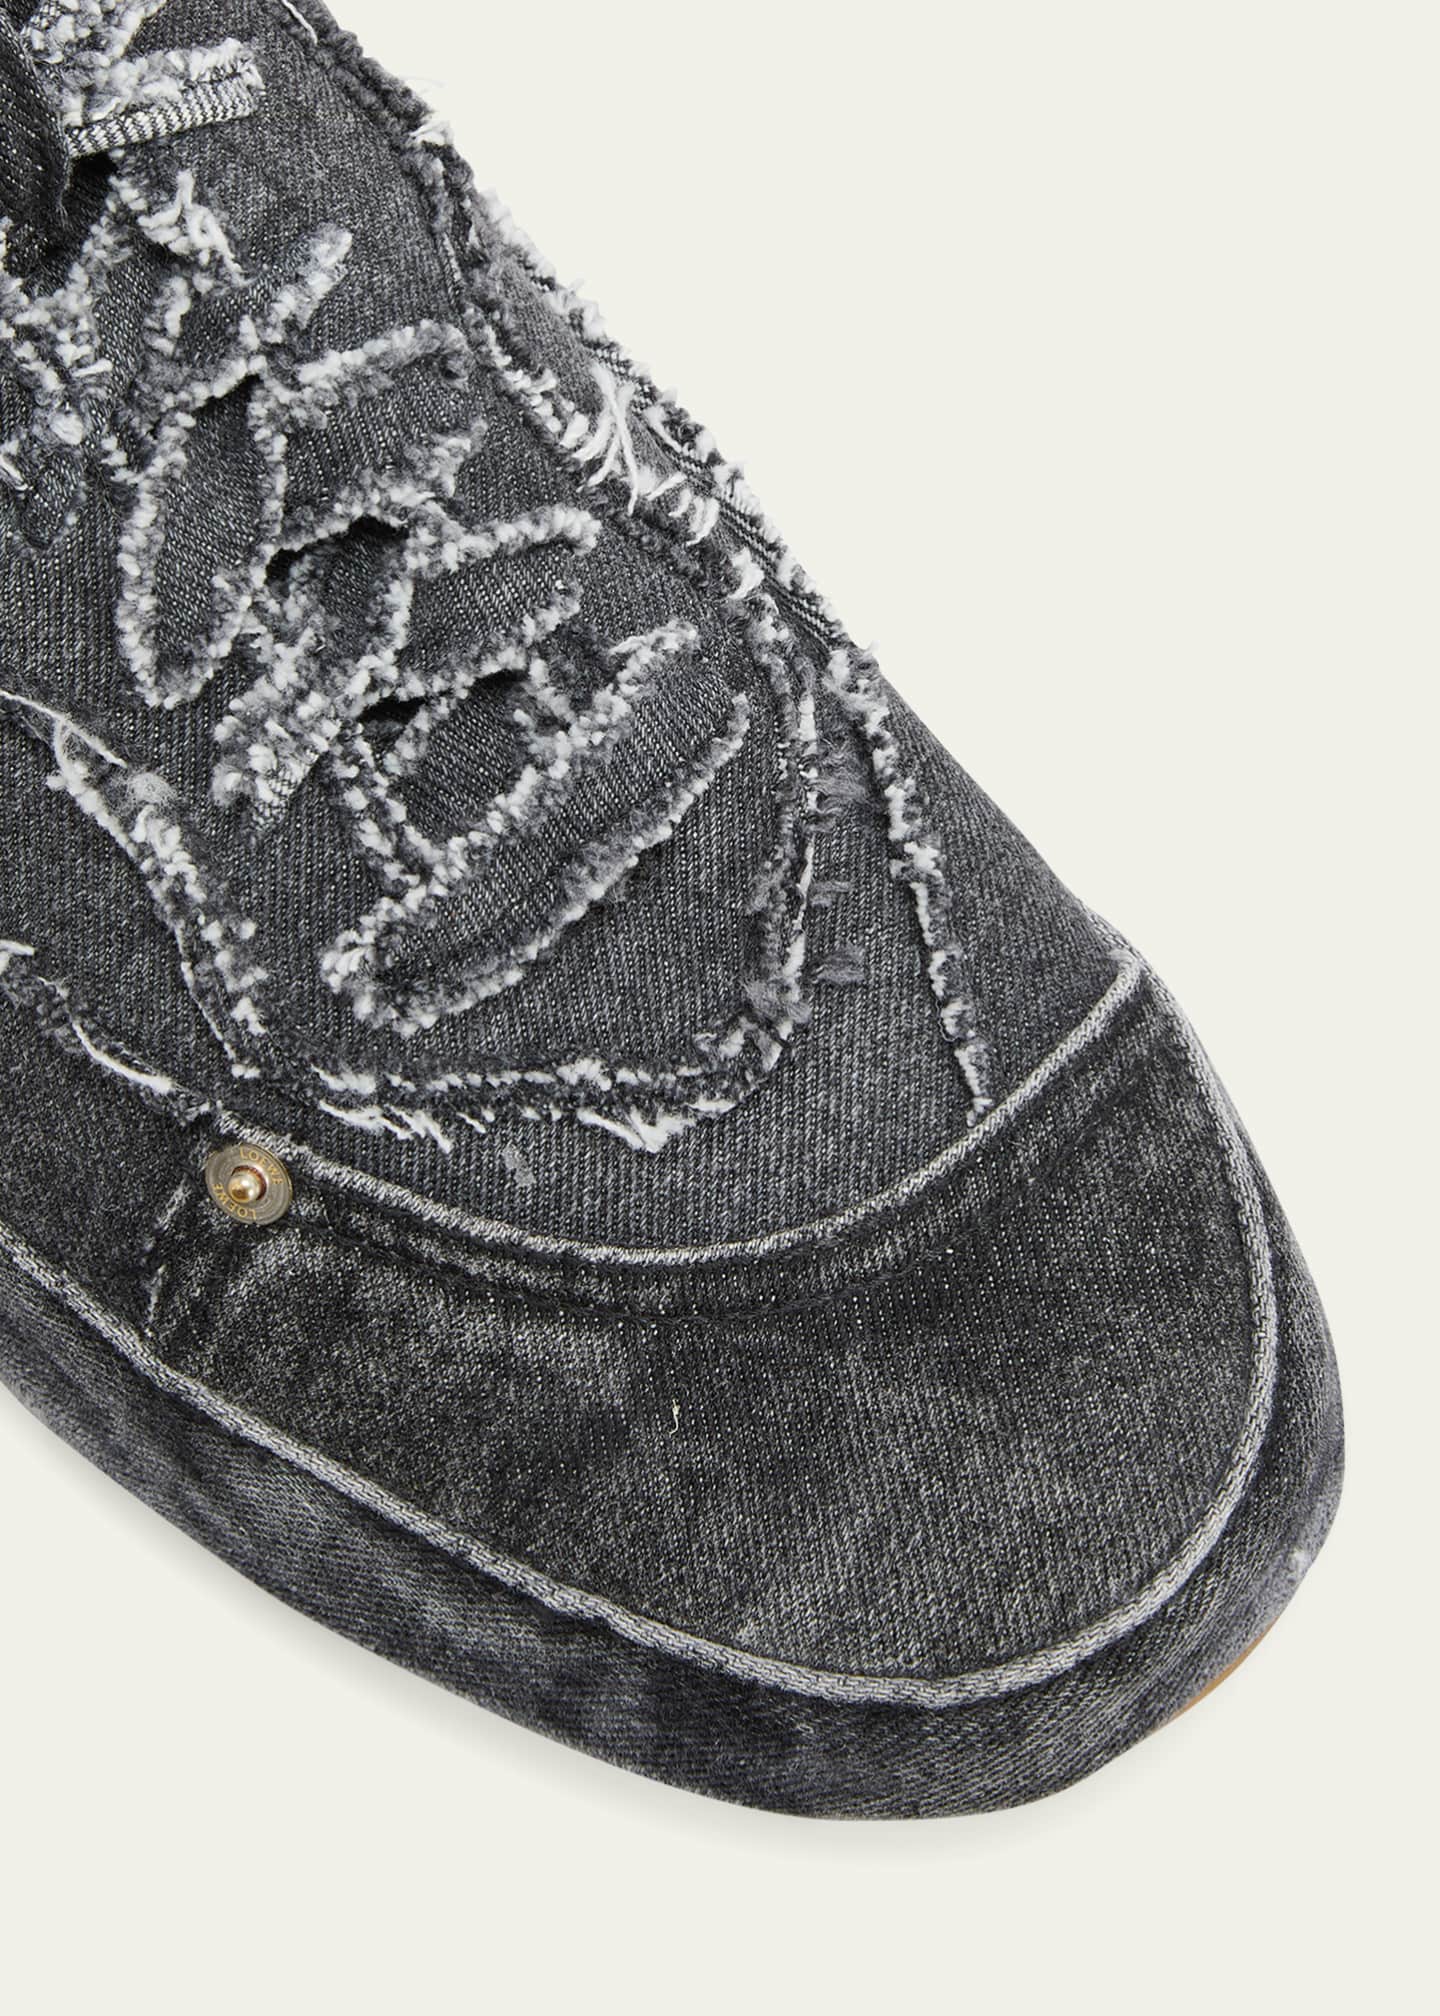 Deconstructed Denim Sneakers in Grey - Loewe